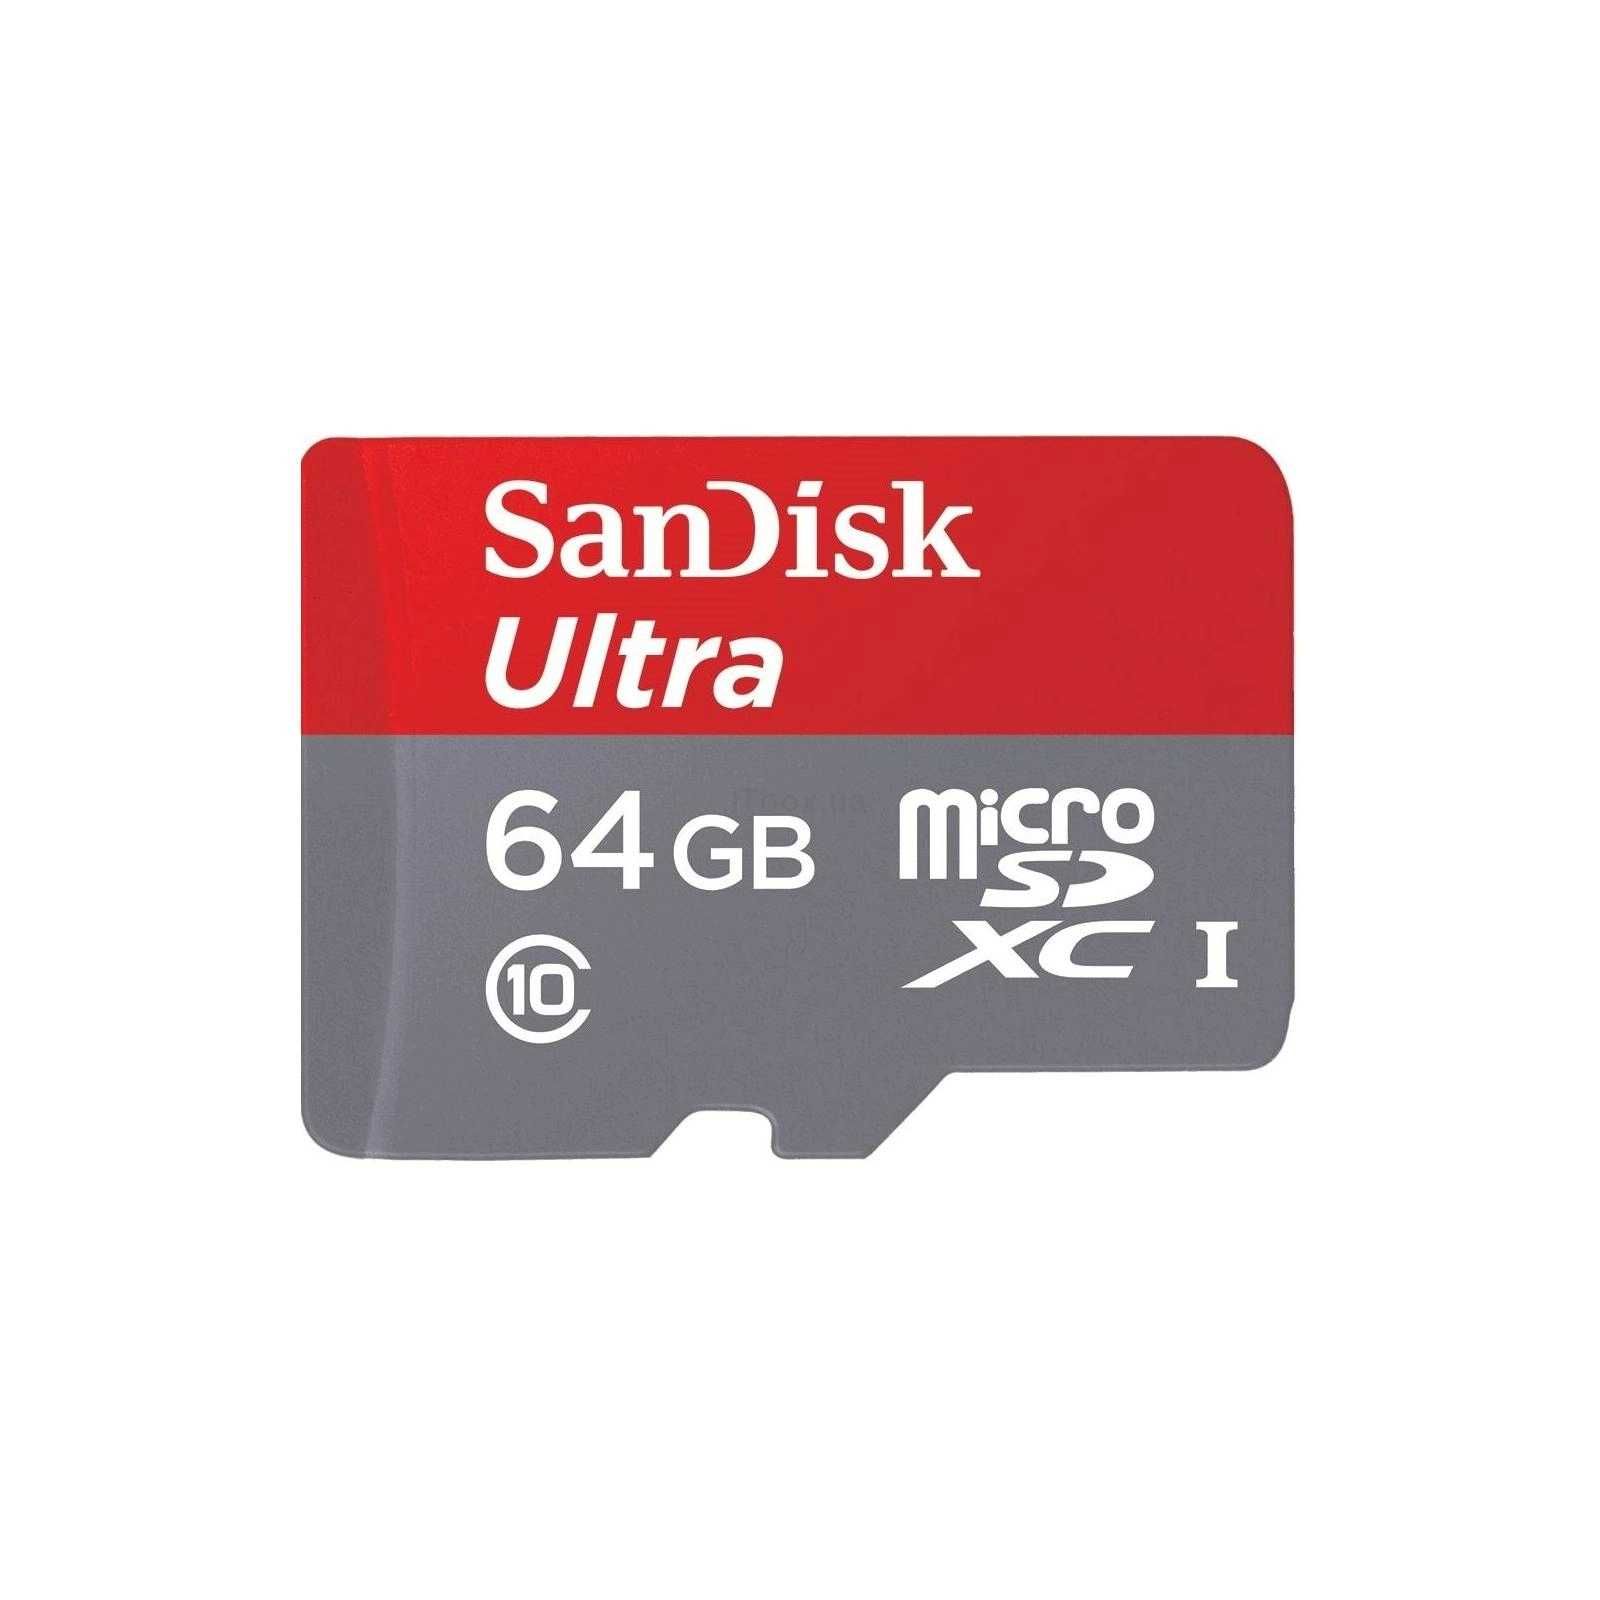 Оригінал!!! карта пам'яті SanDisk 64GB microSD Class 10 UHS-I Ultra